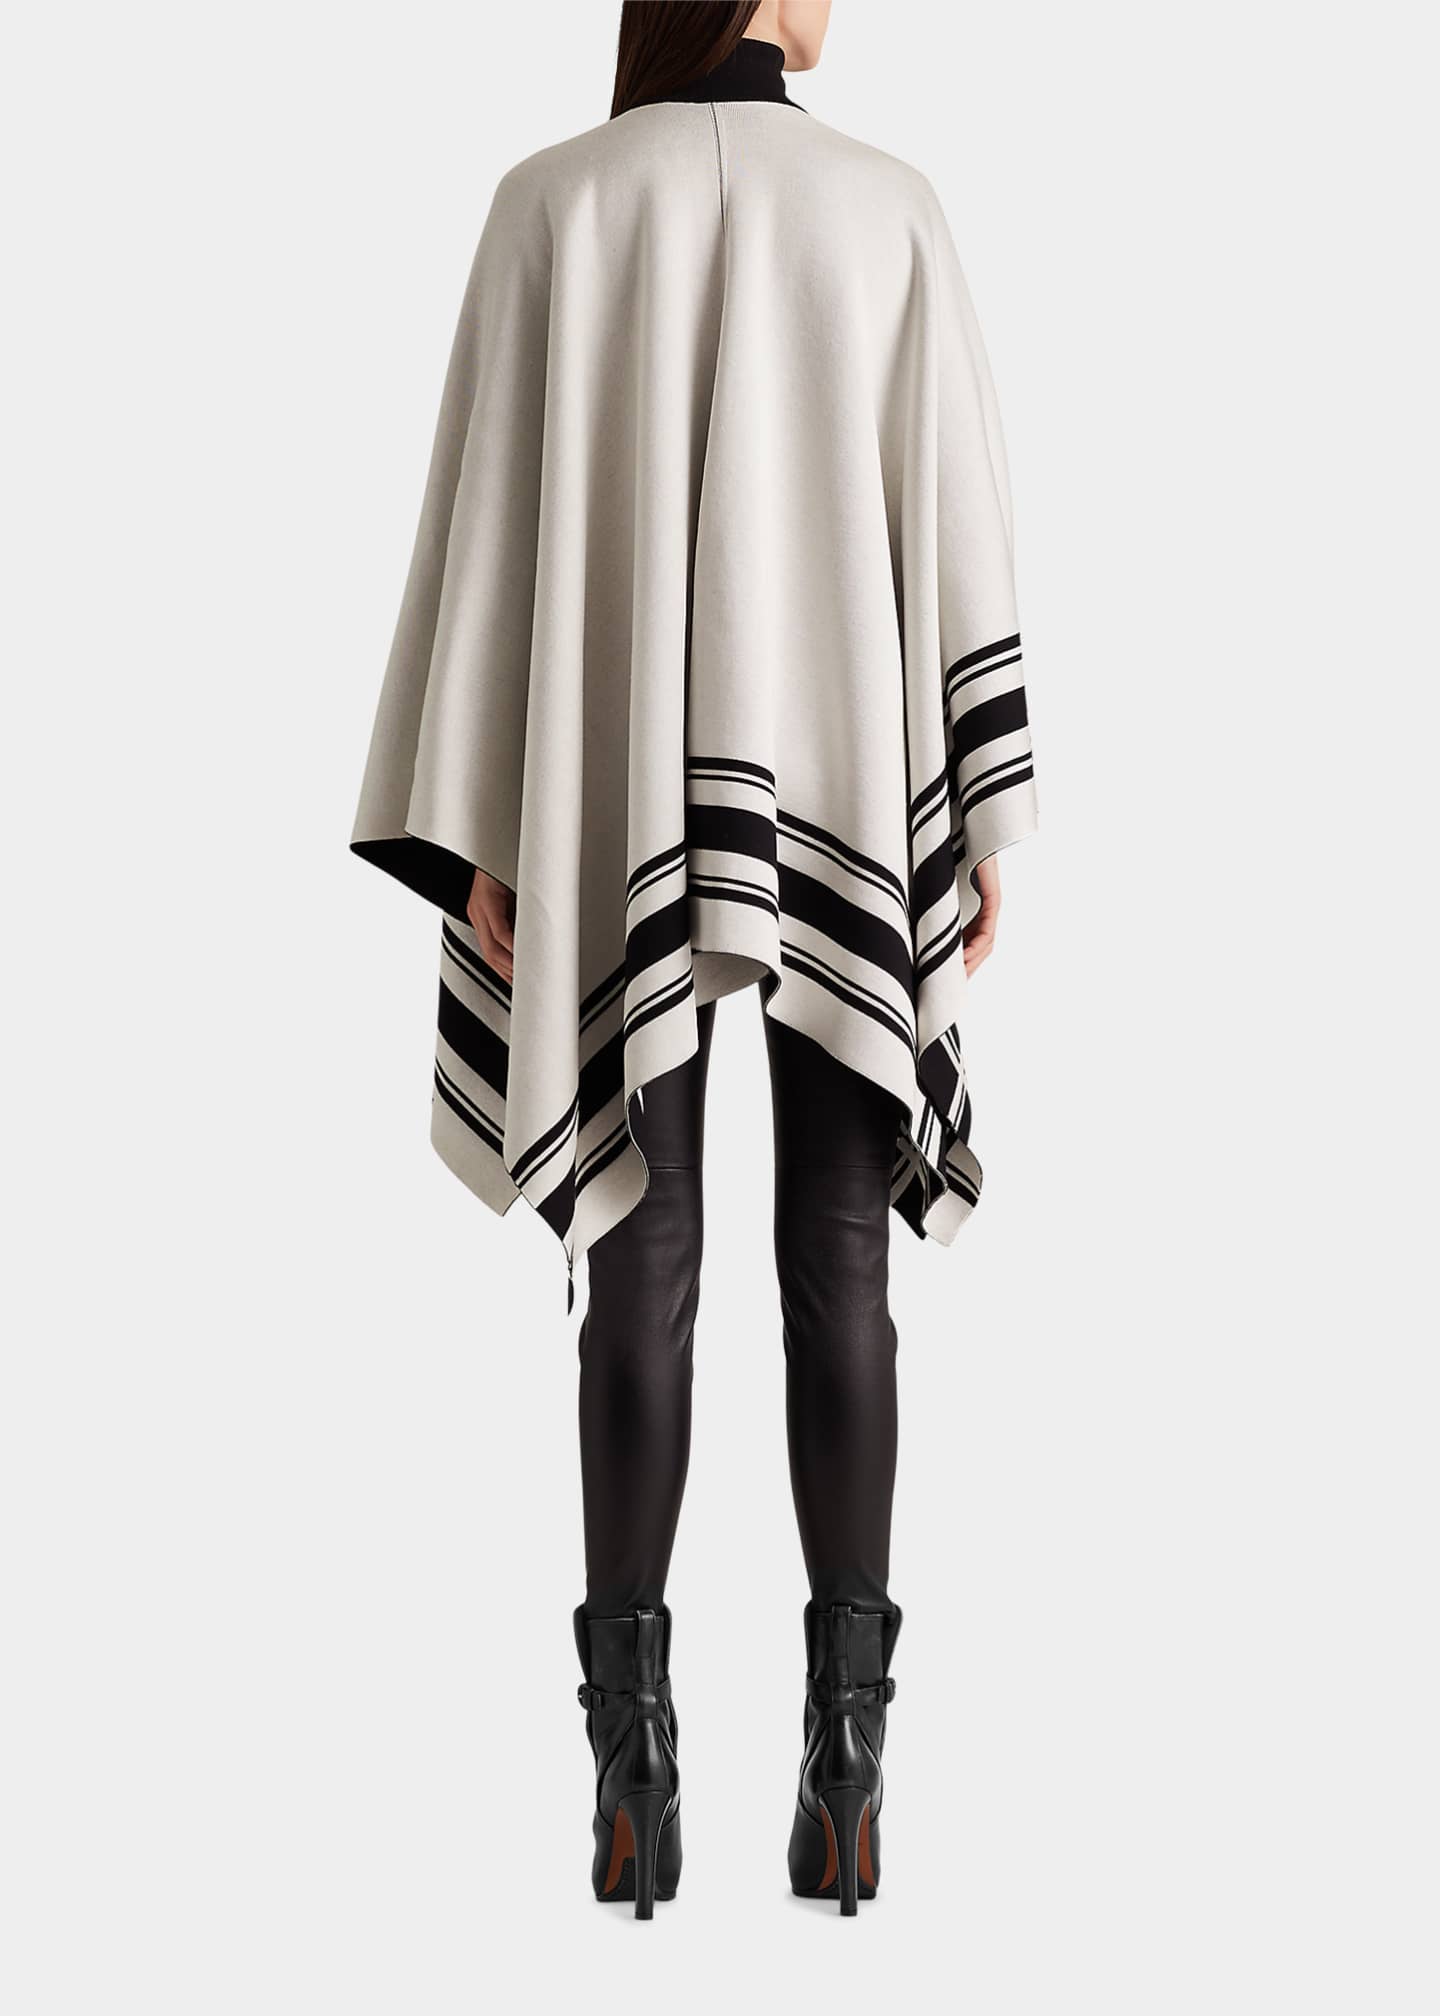 Ralph Lauren Collection Ruana Striped Blanket Poncho - Bergdorf Goodman